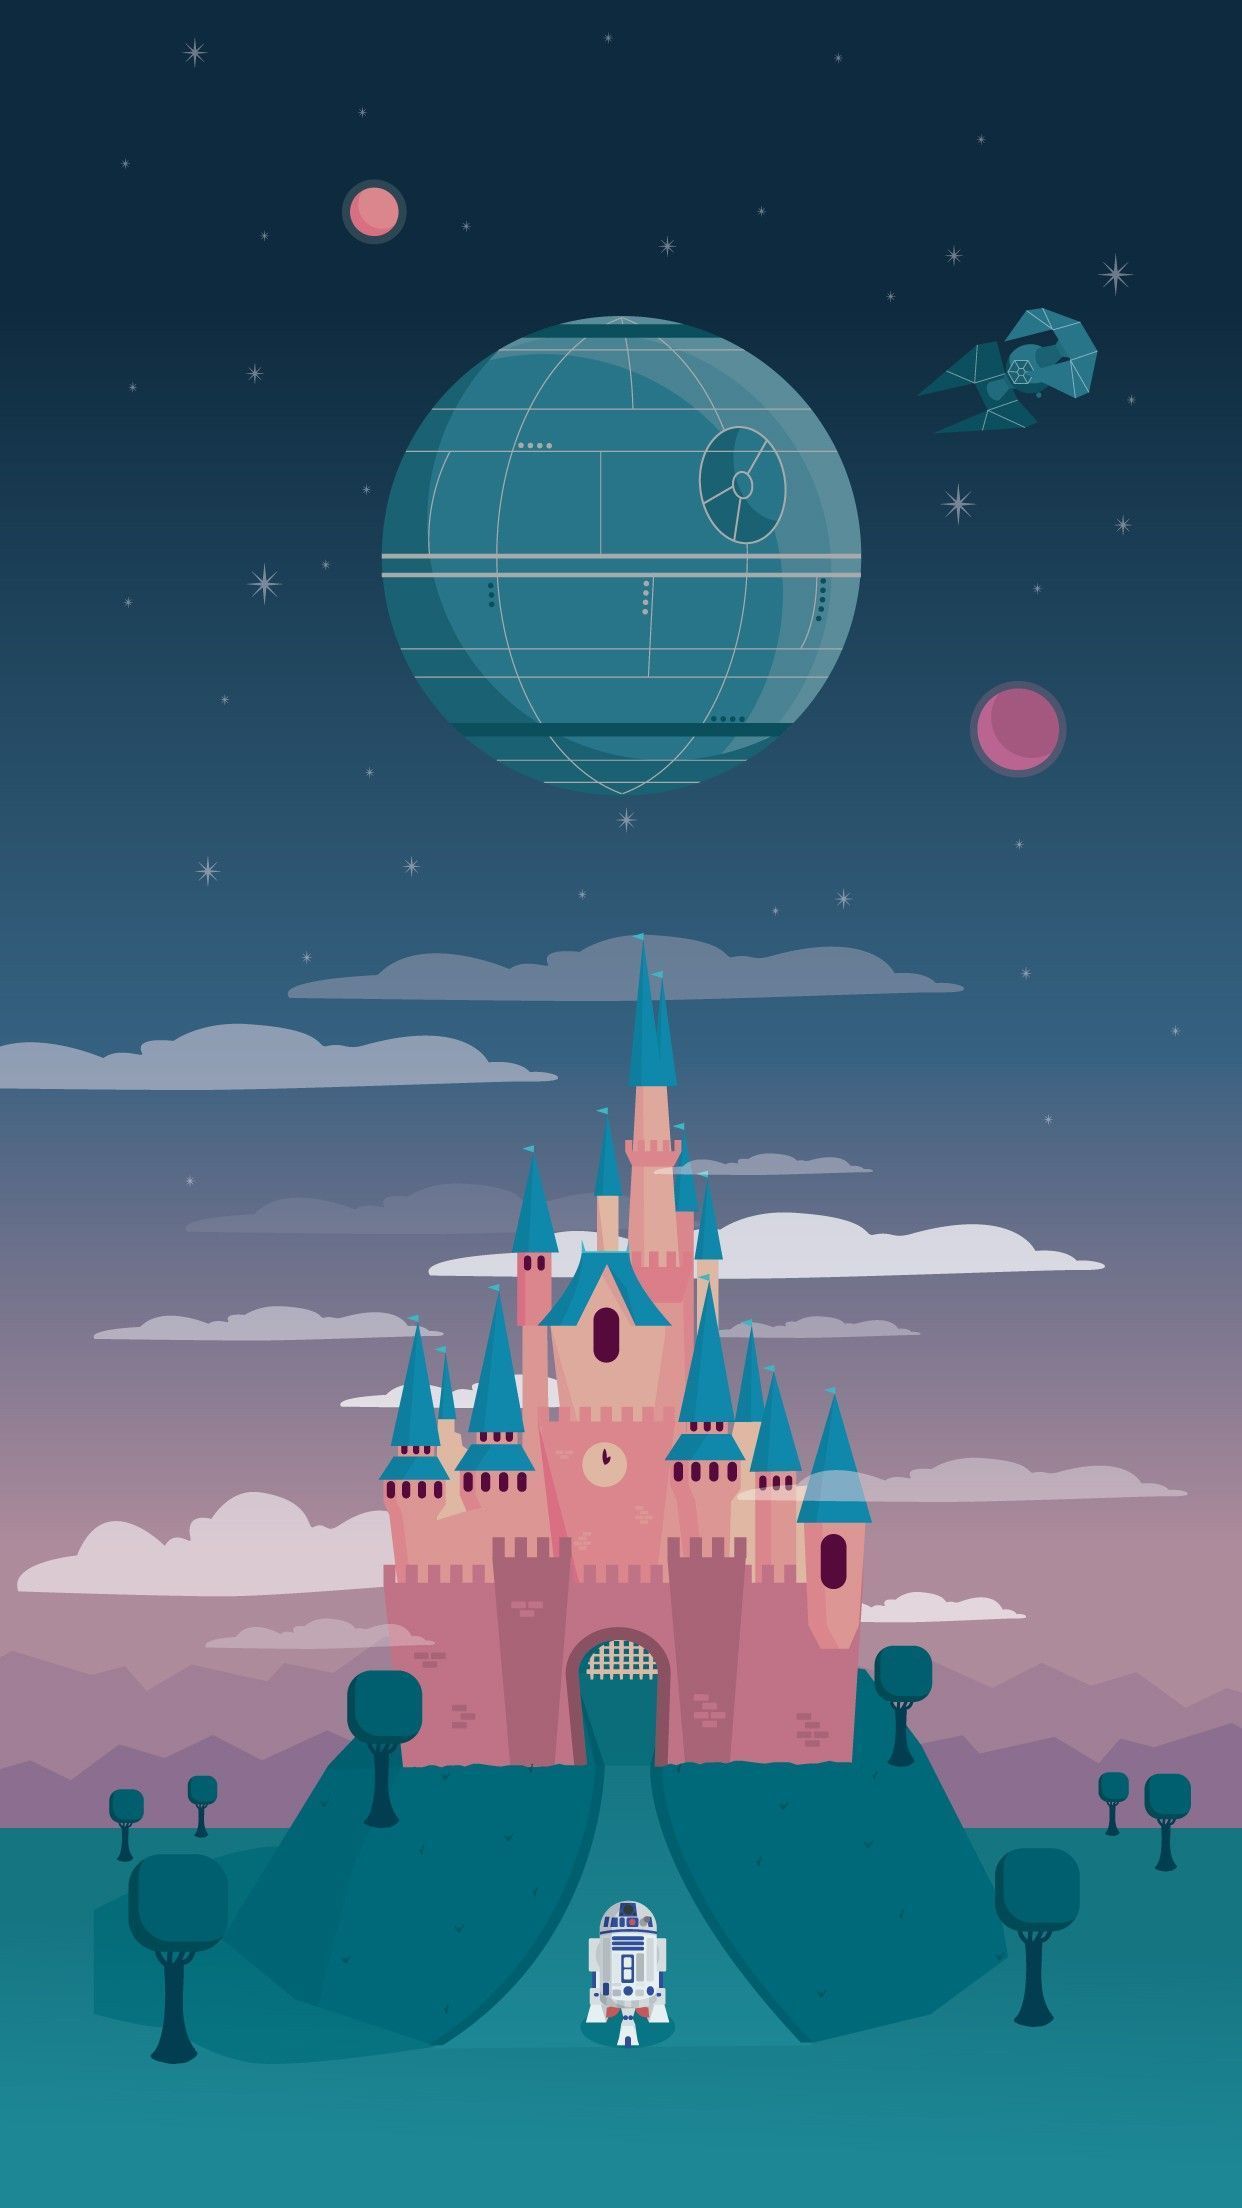 Cute Disney iPhone Wallpapers on WallpaperDog